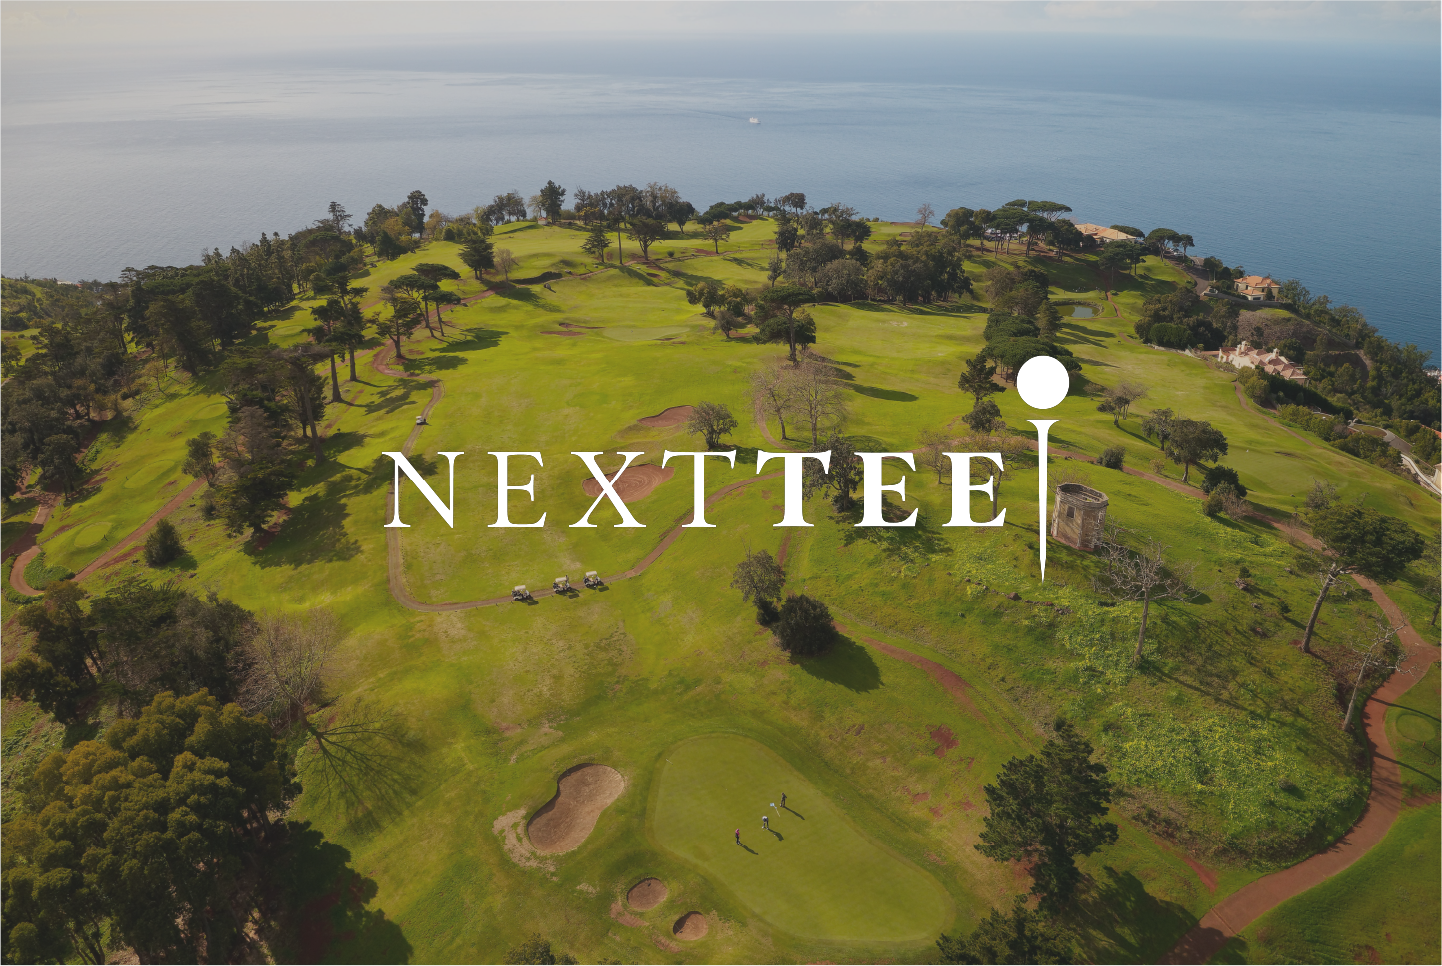 Nexttee Golf